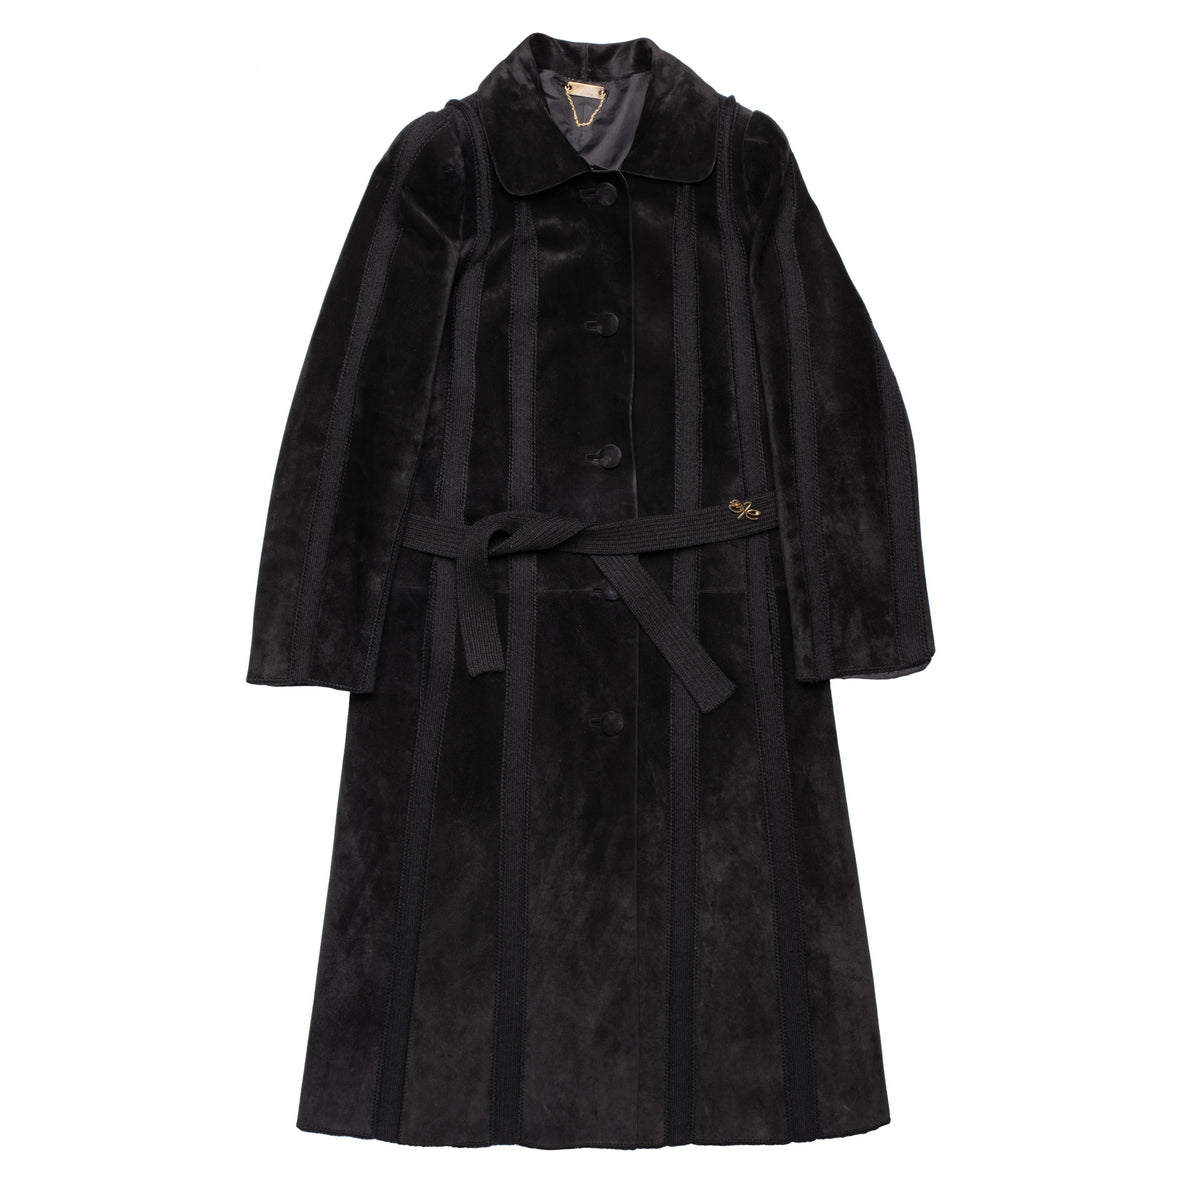 HETTABRETZ Black Suede Leather Knit Belted Women's Coat US 8 10